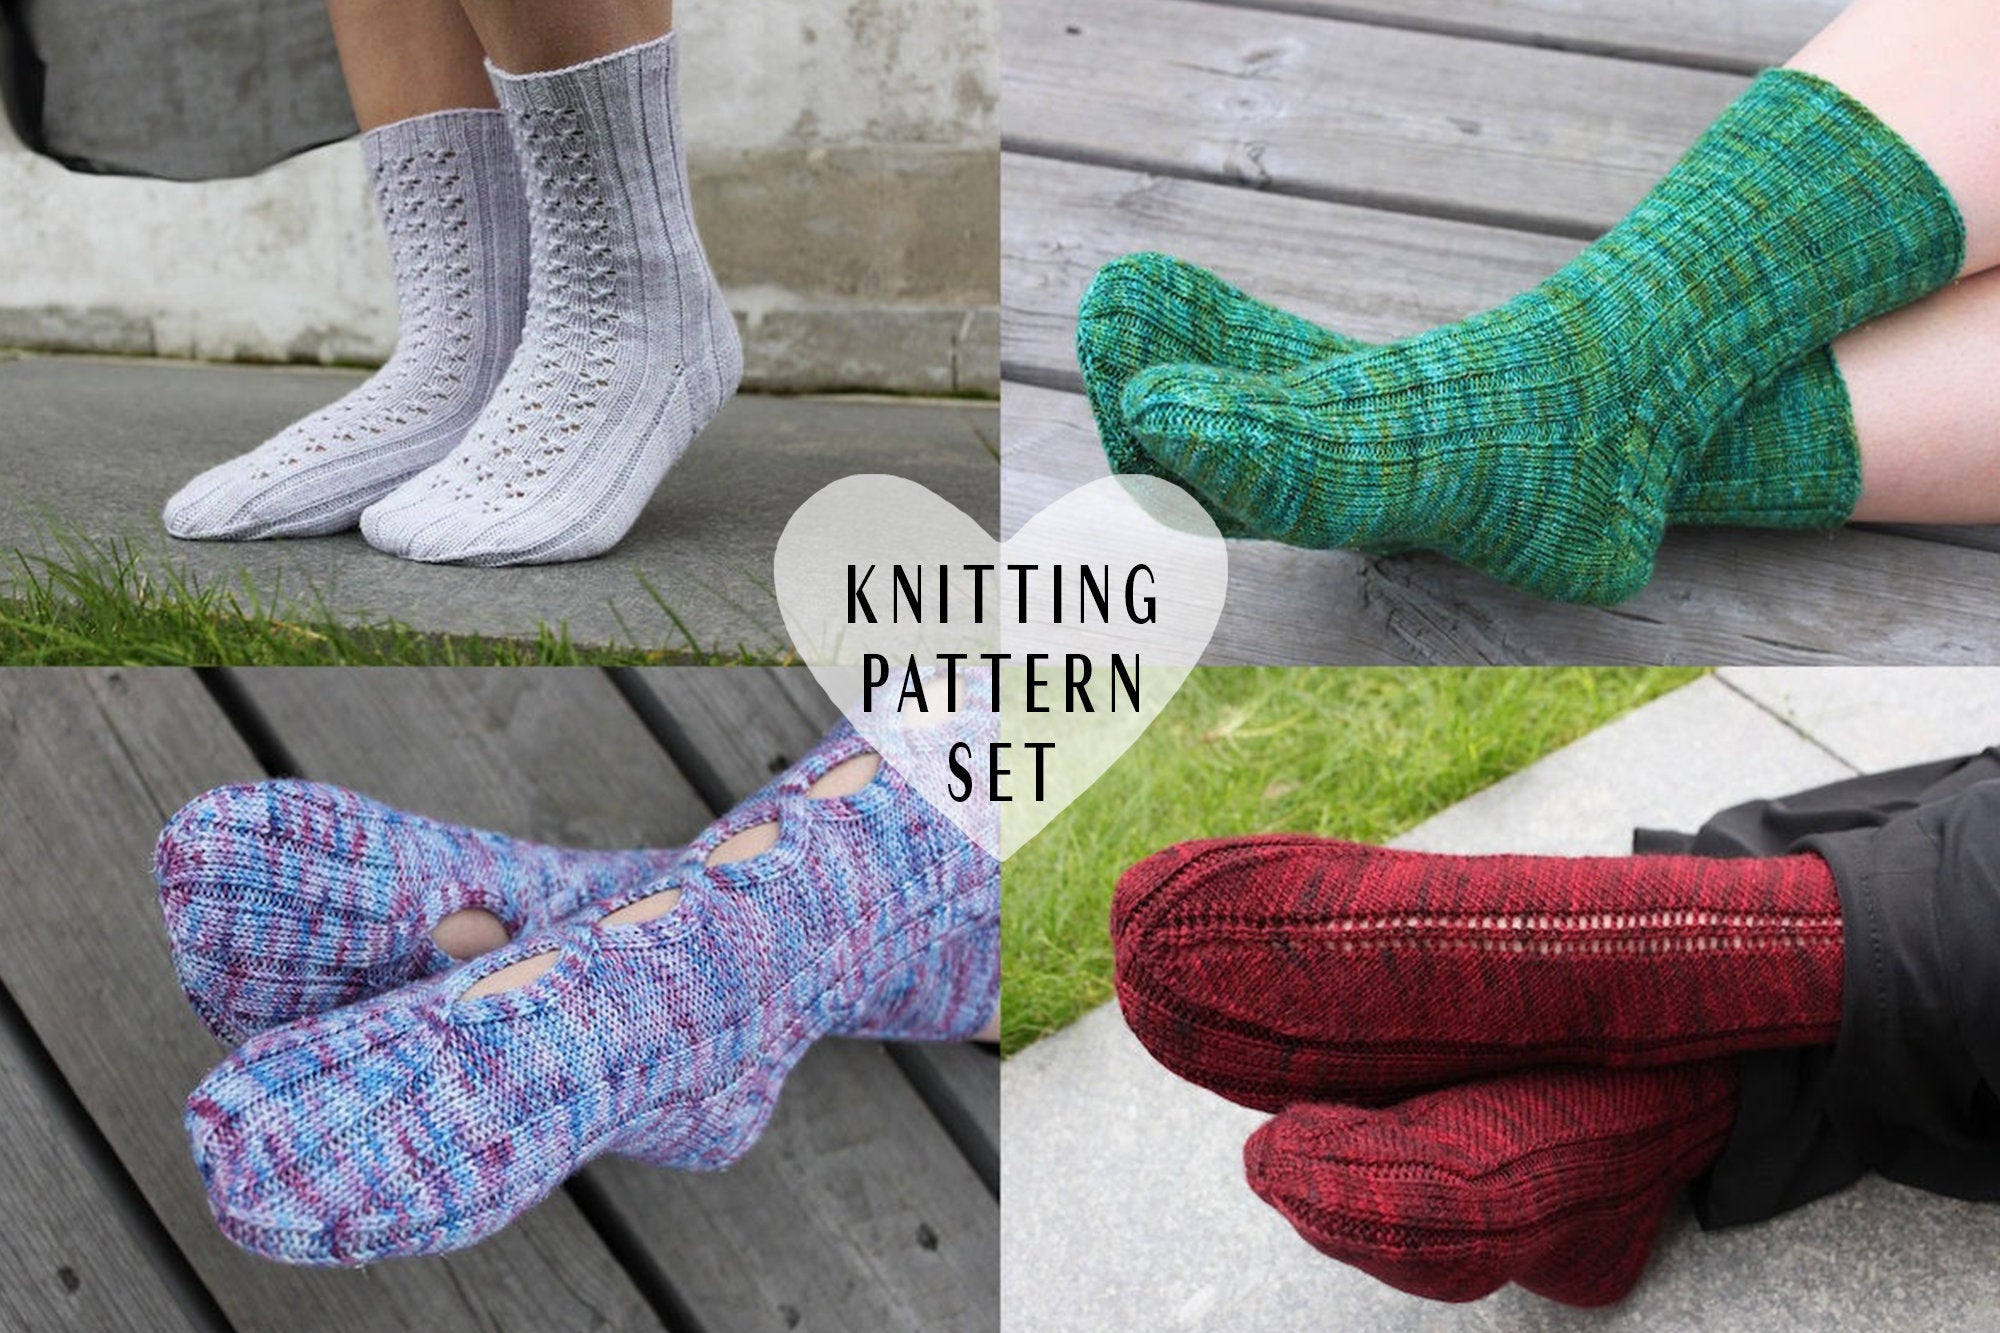 Knitting Sock Patterns Knitting Pattern Bundle Socks Knit Socks Knitted Socks Rib Lace Open Cable Socks Diy Socks Pattern Set Knitter Gift Project Feet